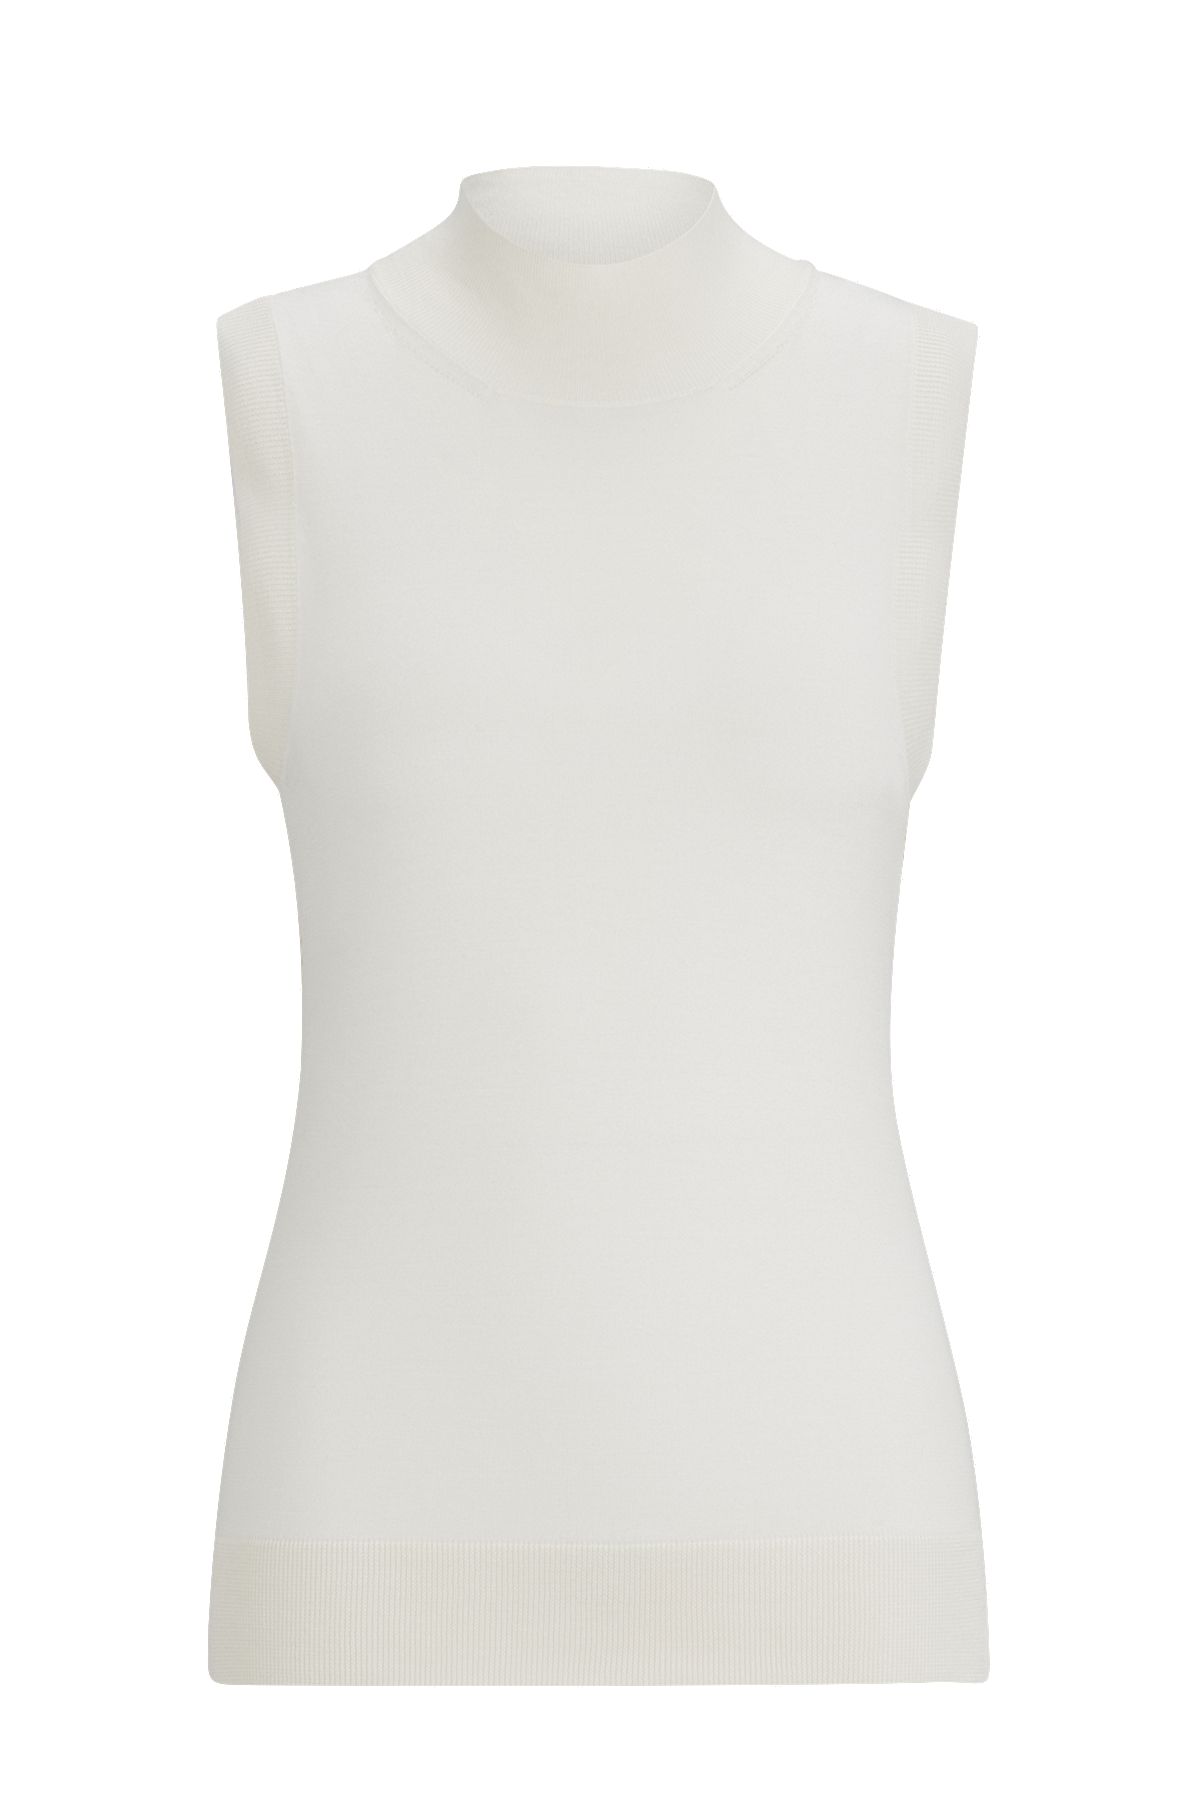 Sleeveless top in silk with mock neckline, White